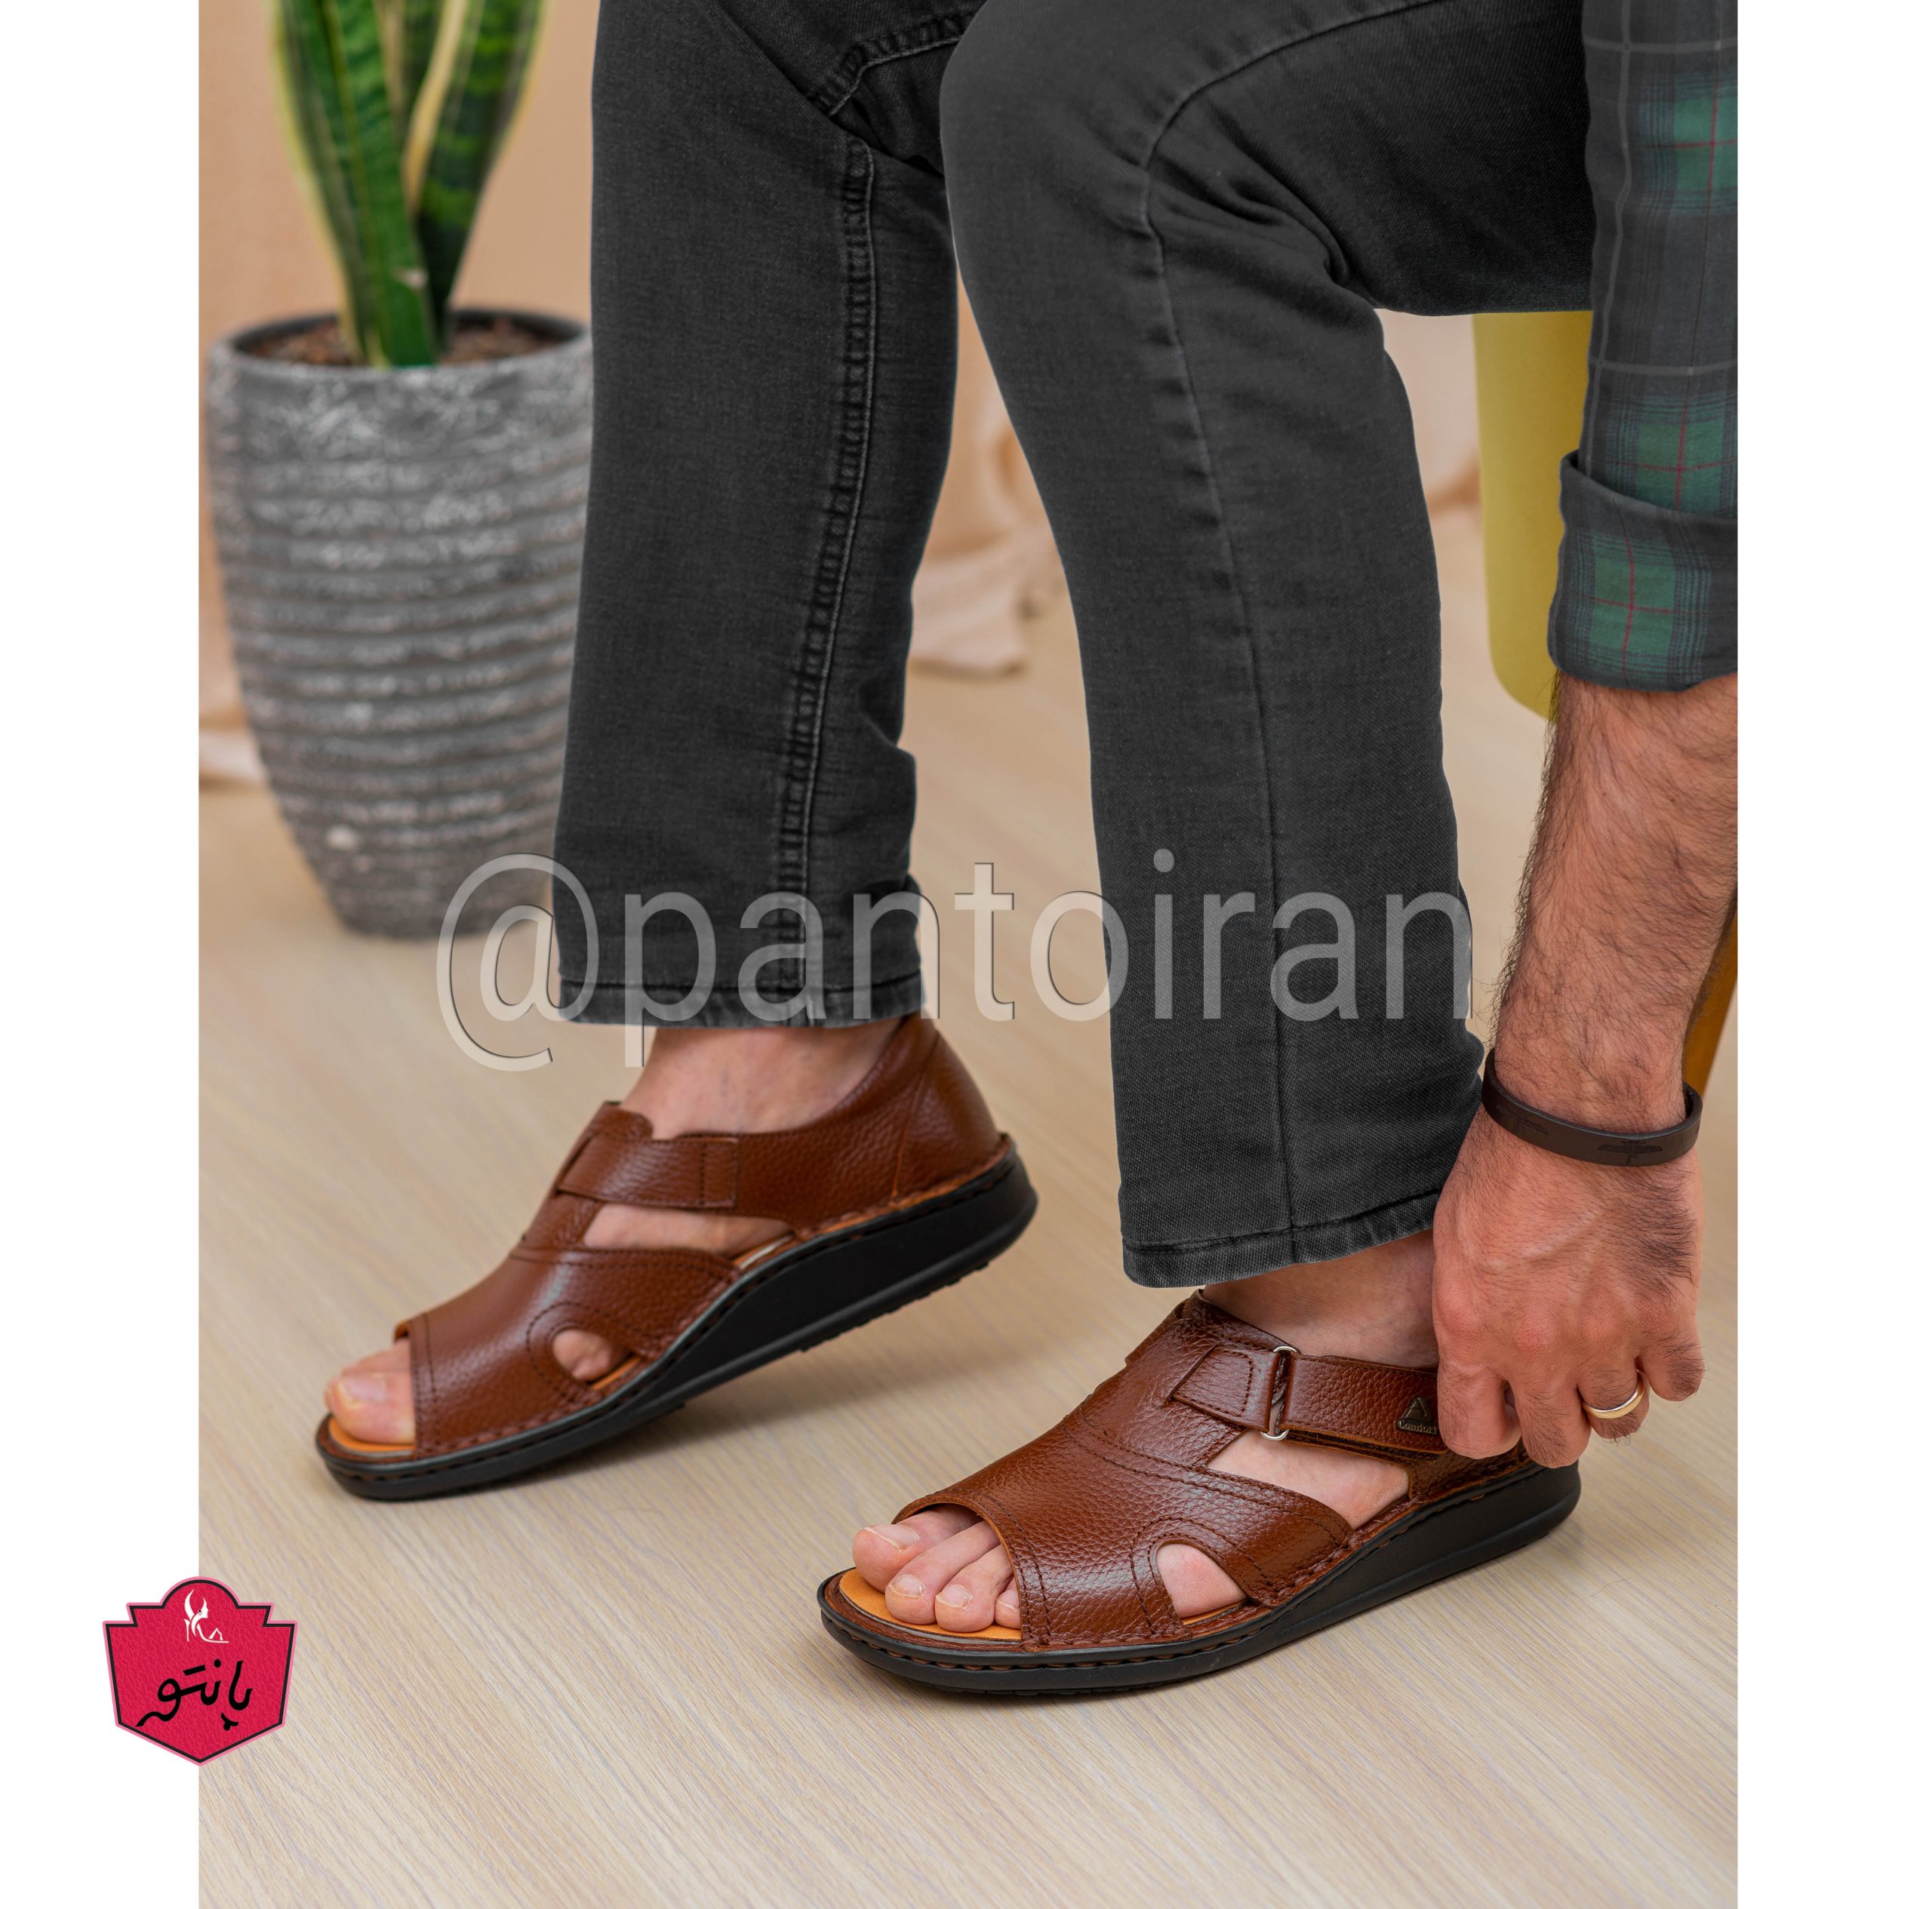 Medical sandals, model: "Sahand" | Code 1300201